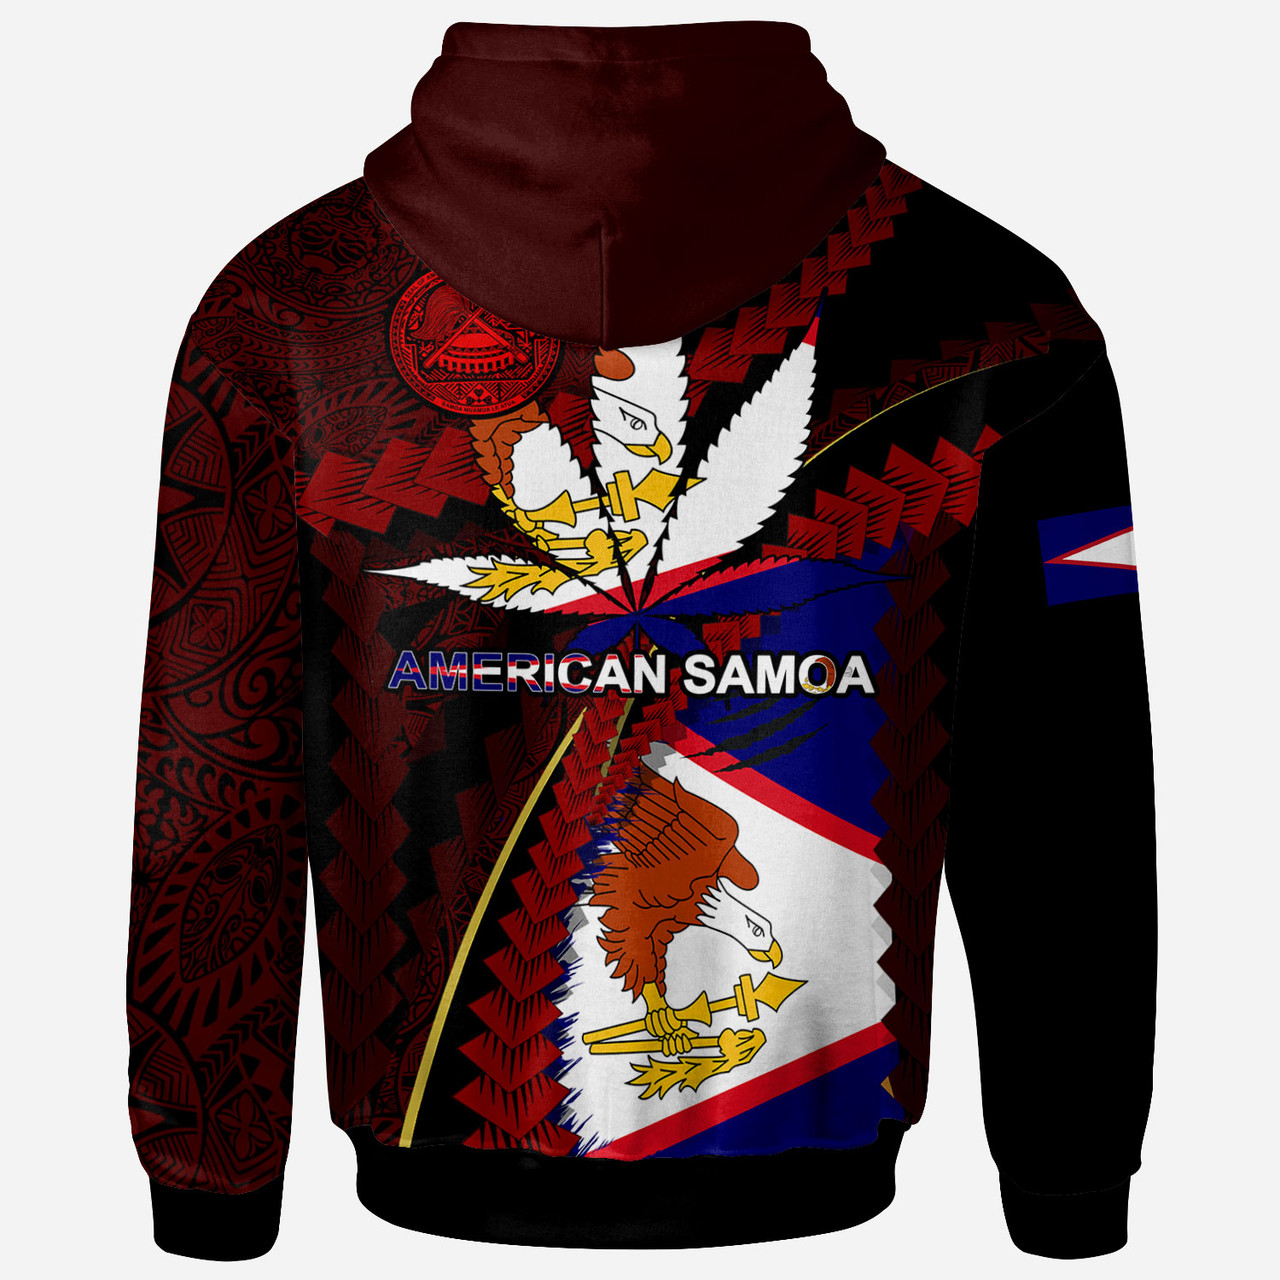 American Samoa Hoodie - American Samoa Independence Day With State Flag And Marijuana Leaf Polynesian Style